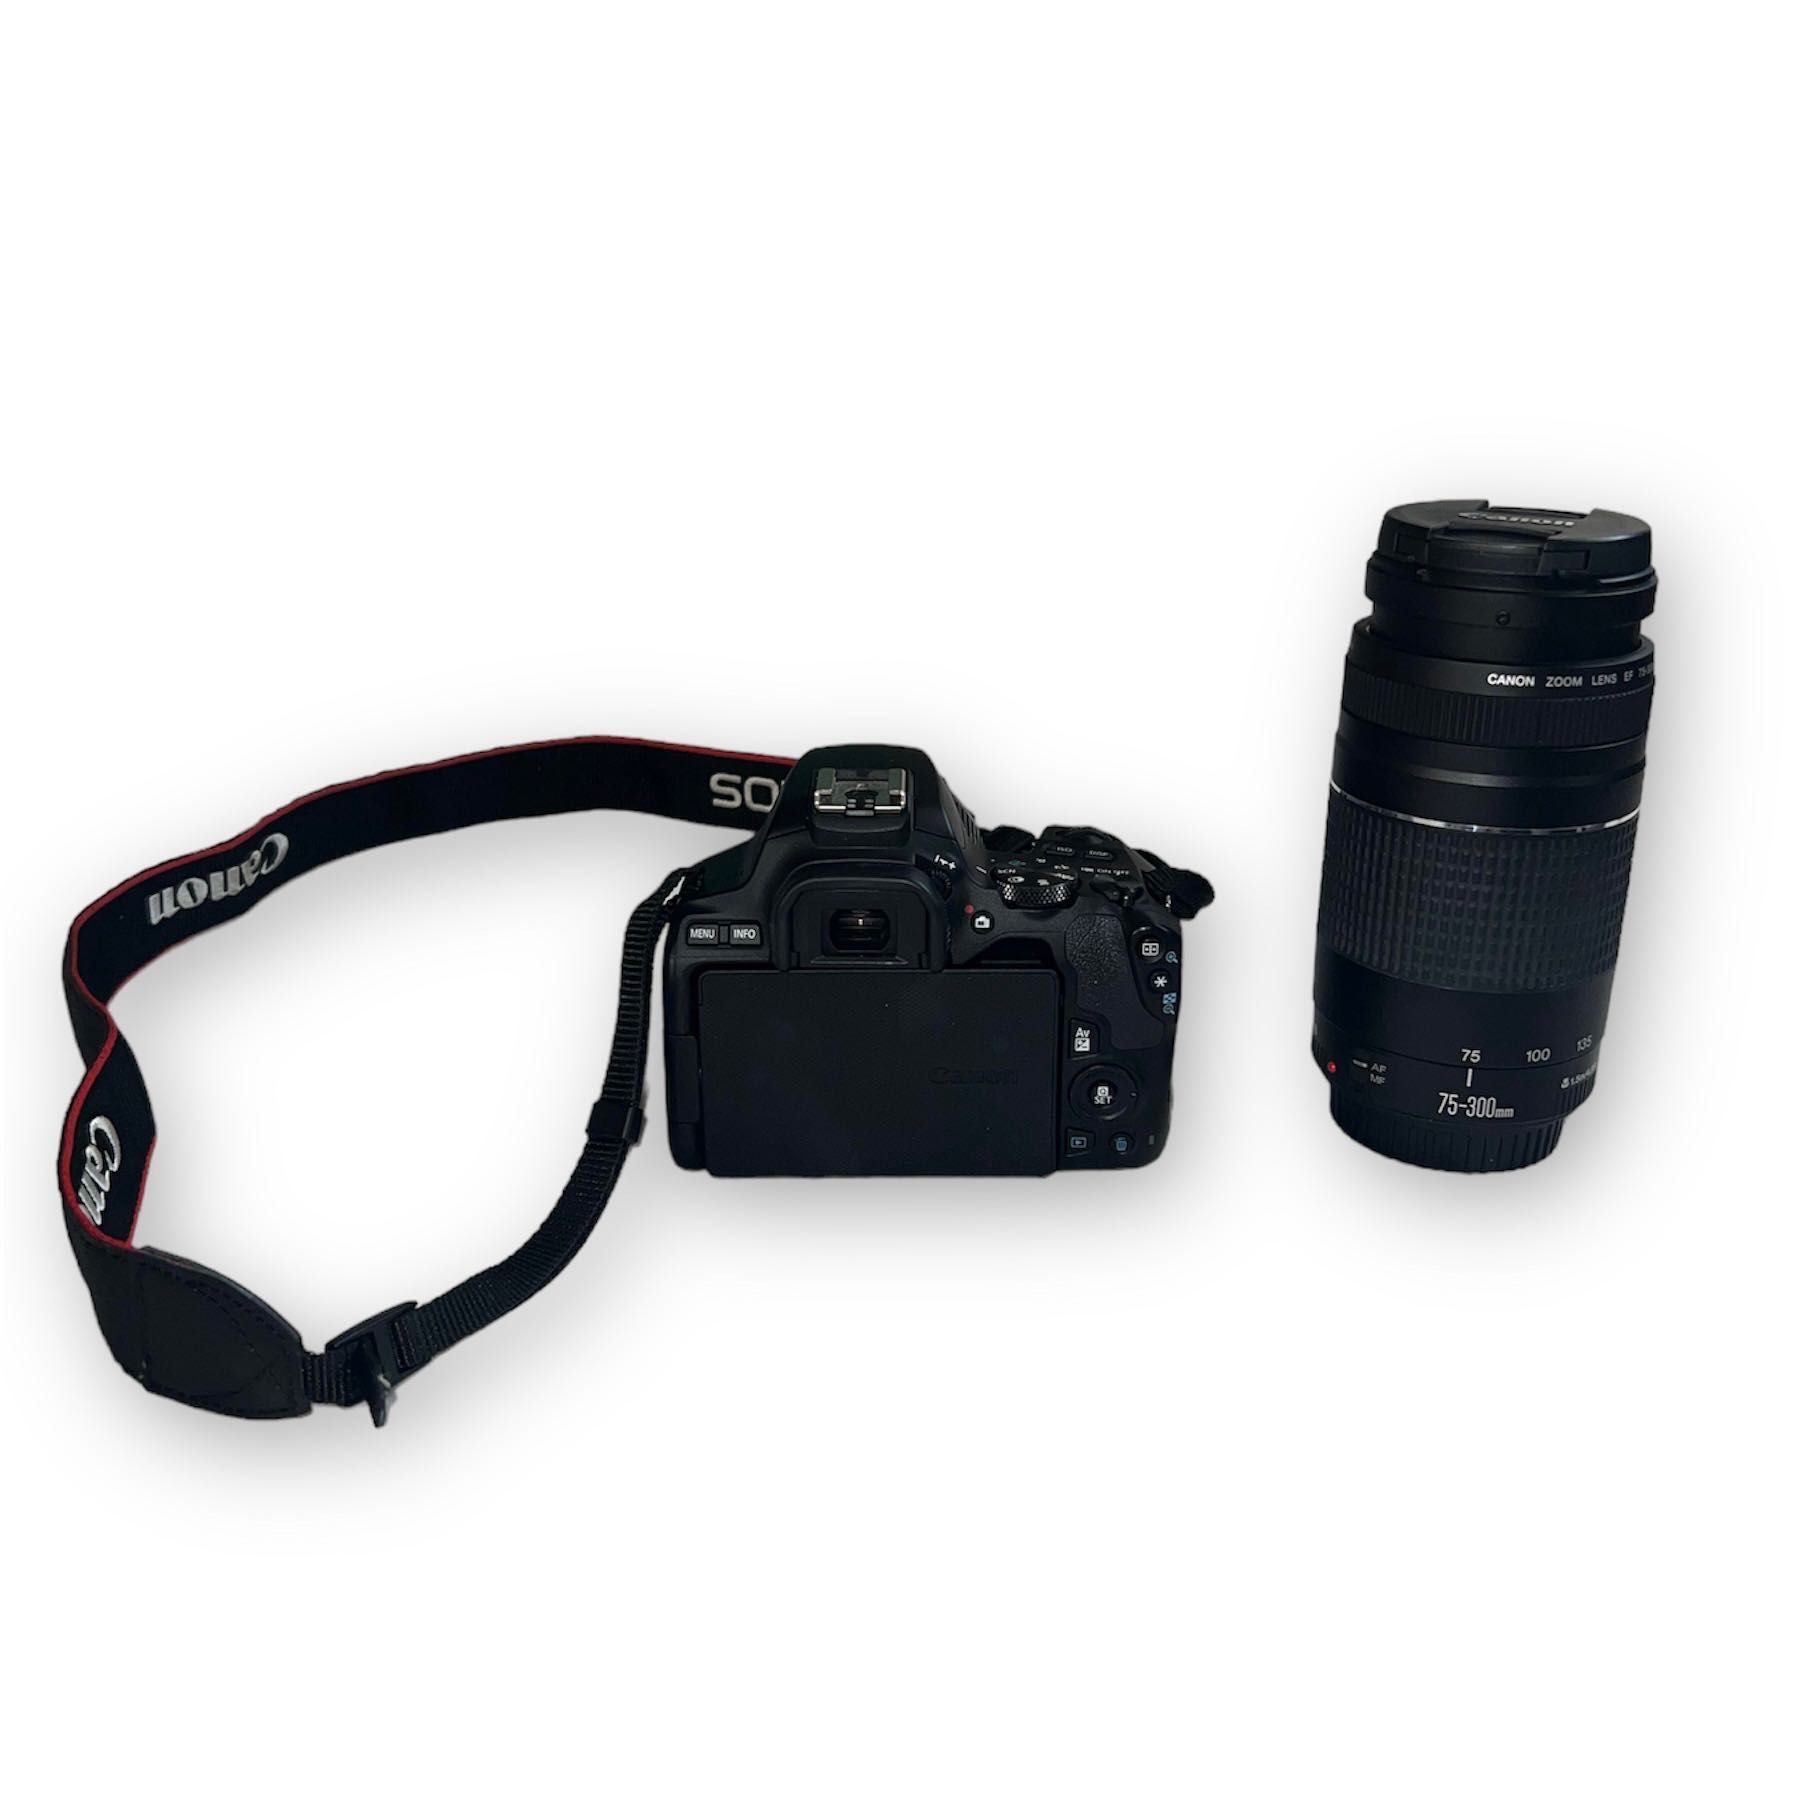 Canon EOS 250D + lente 18-55mm + lente 75-300mm